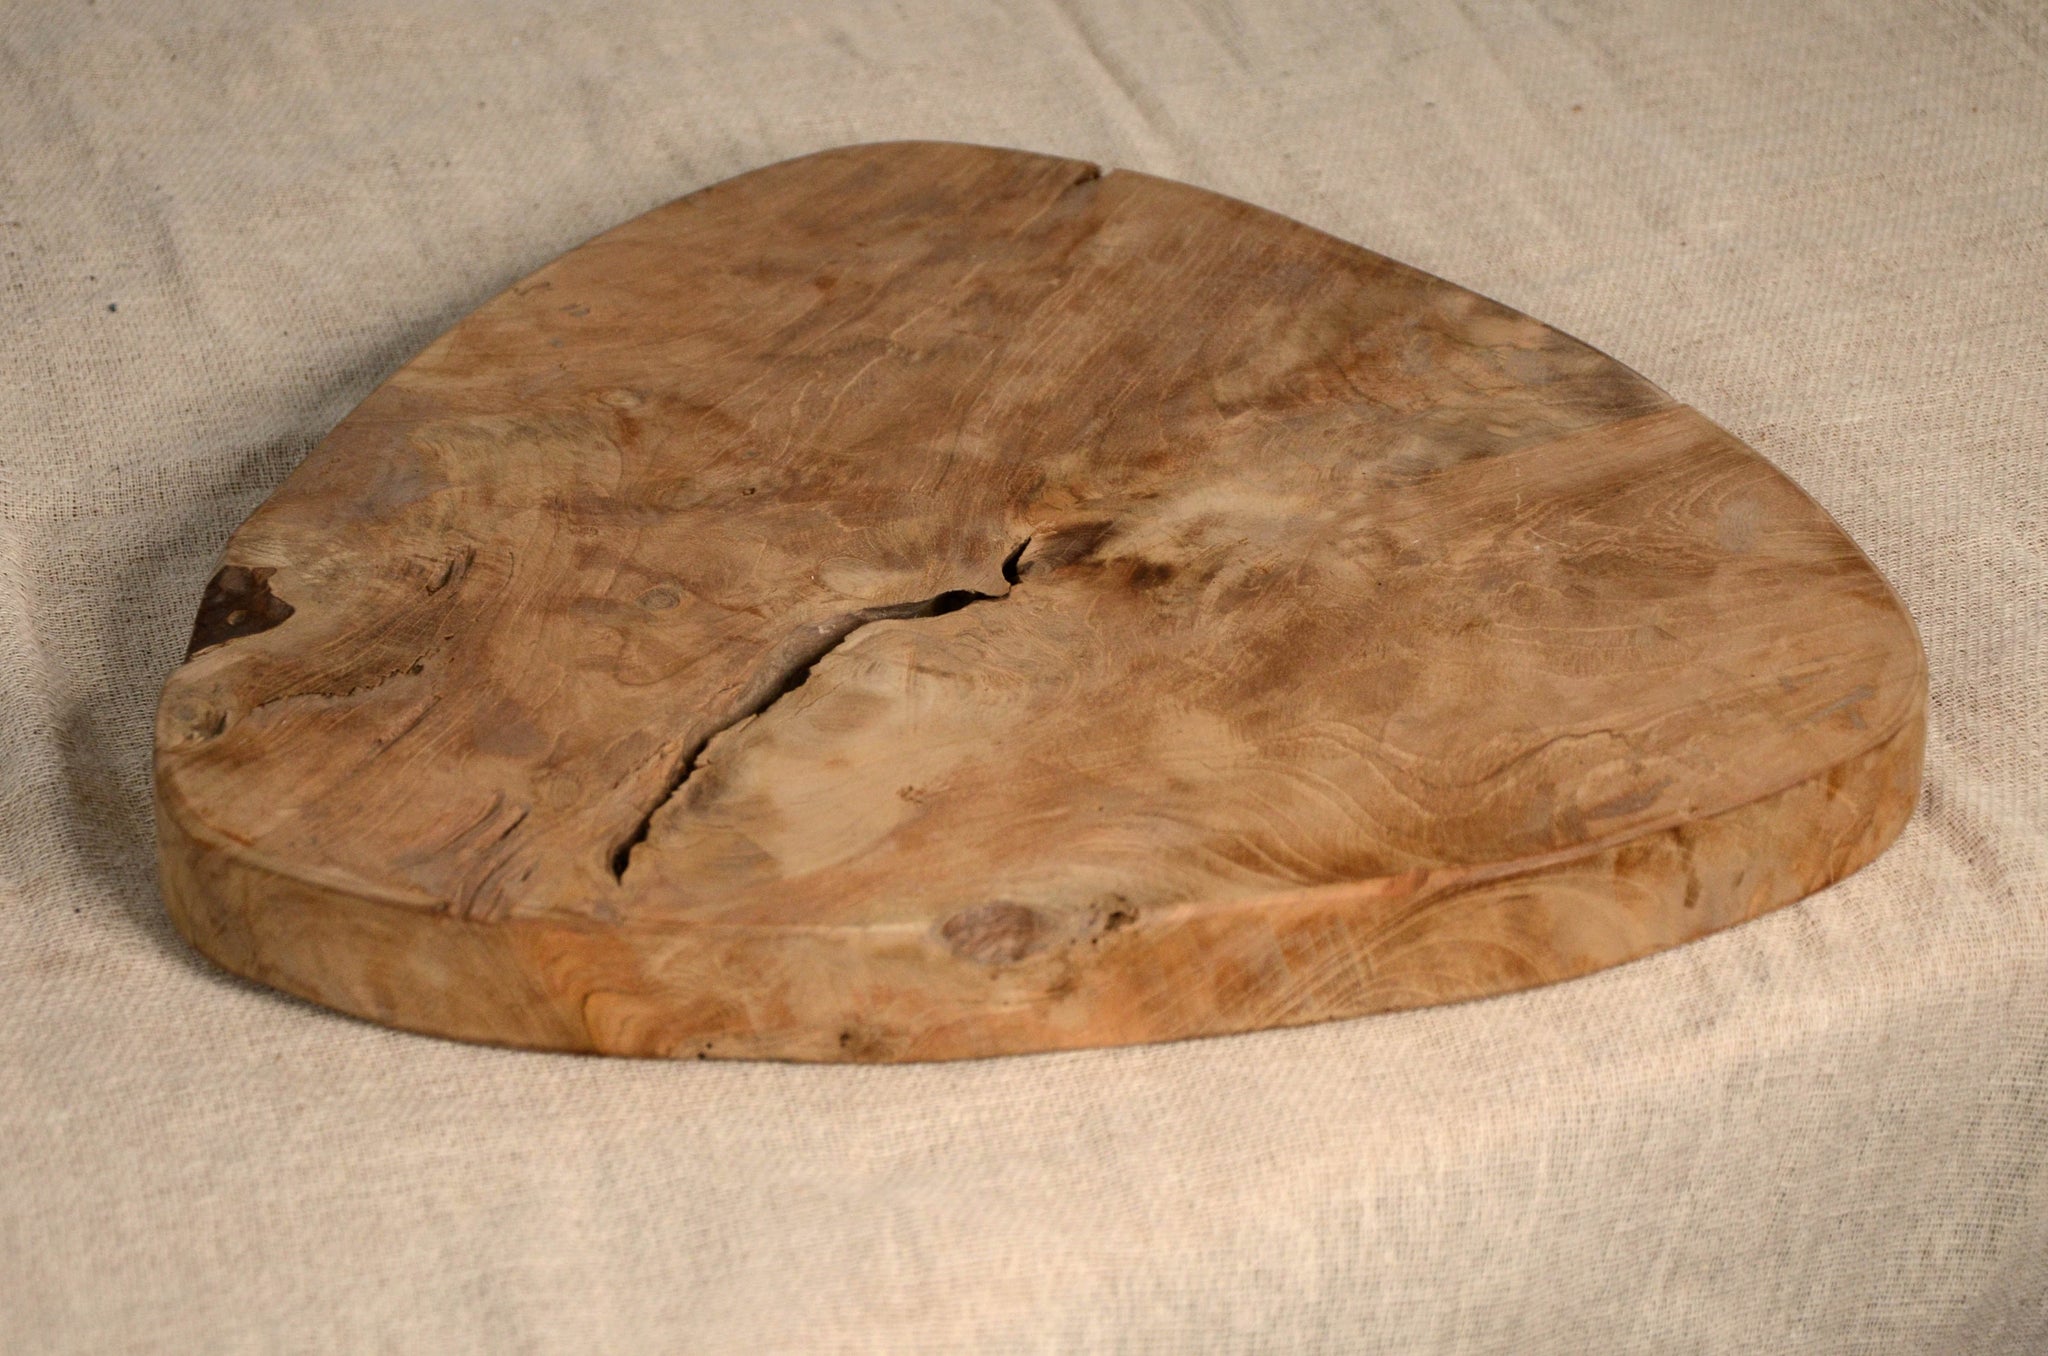 Reclaimed Rustic Teak Root Chopping Boards Serving Platters Bread Board Cheese Board